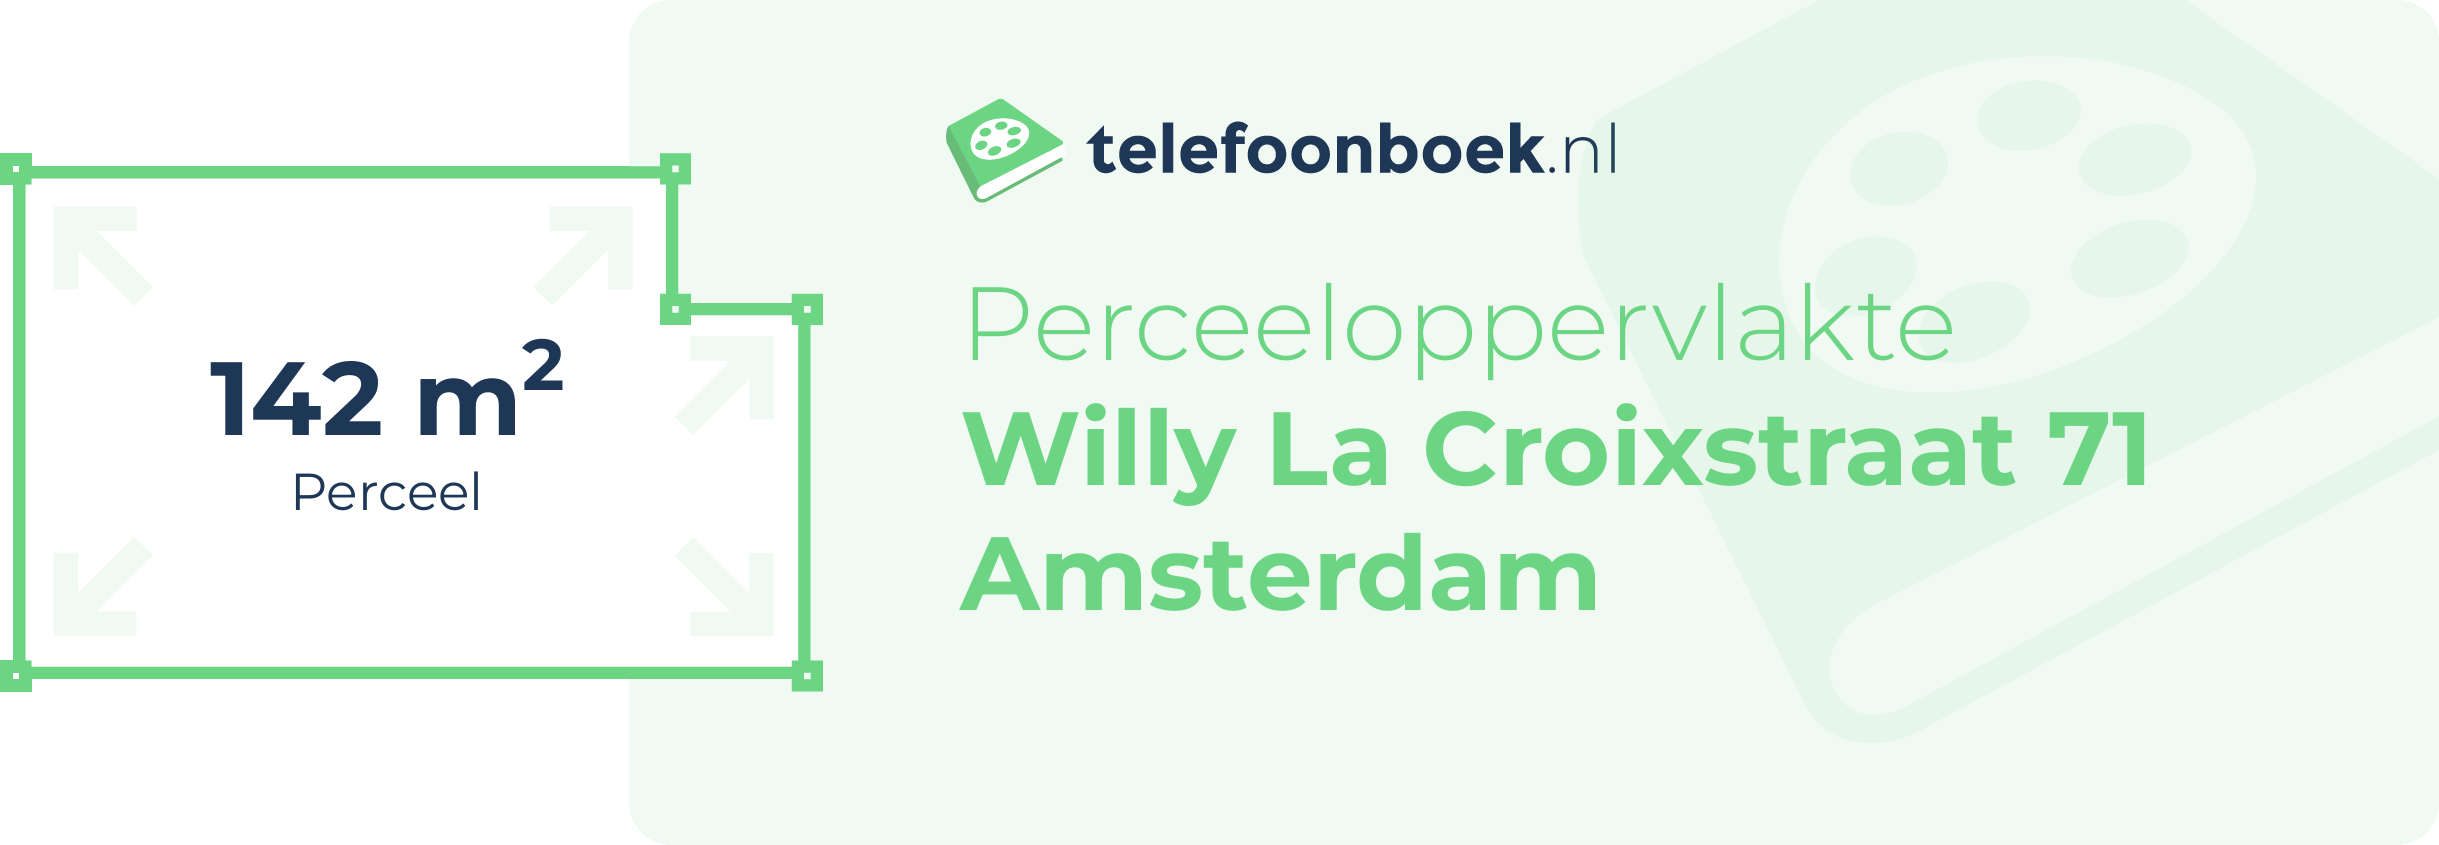 Perceeloppervlakte Willy La Croixstraat 71 Amsterdam